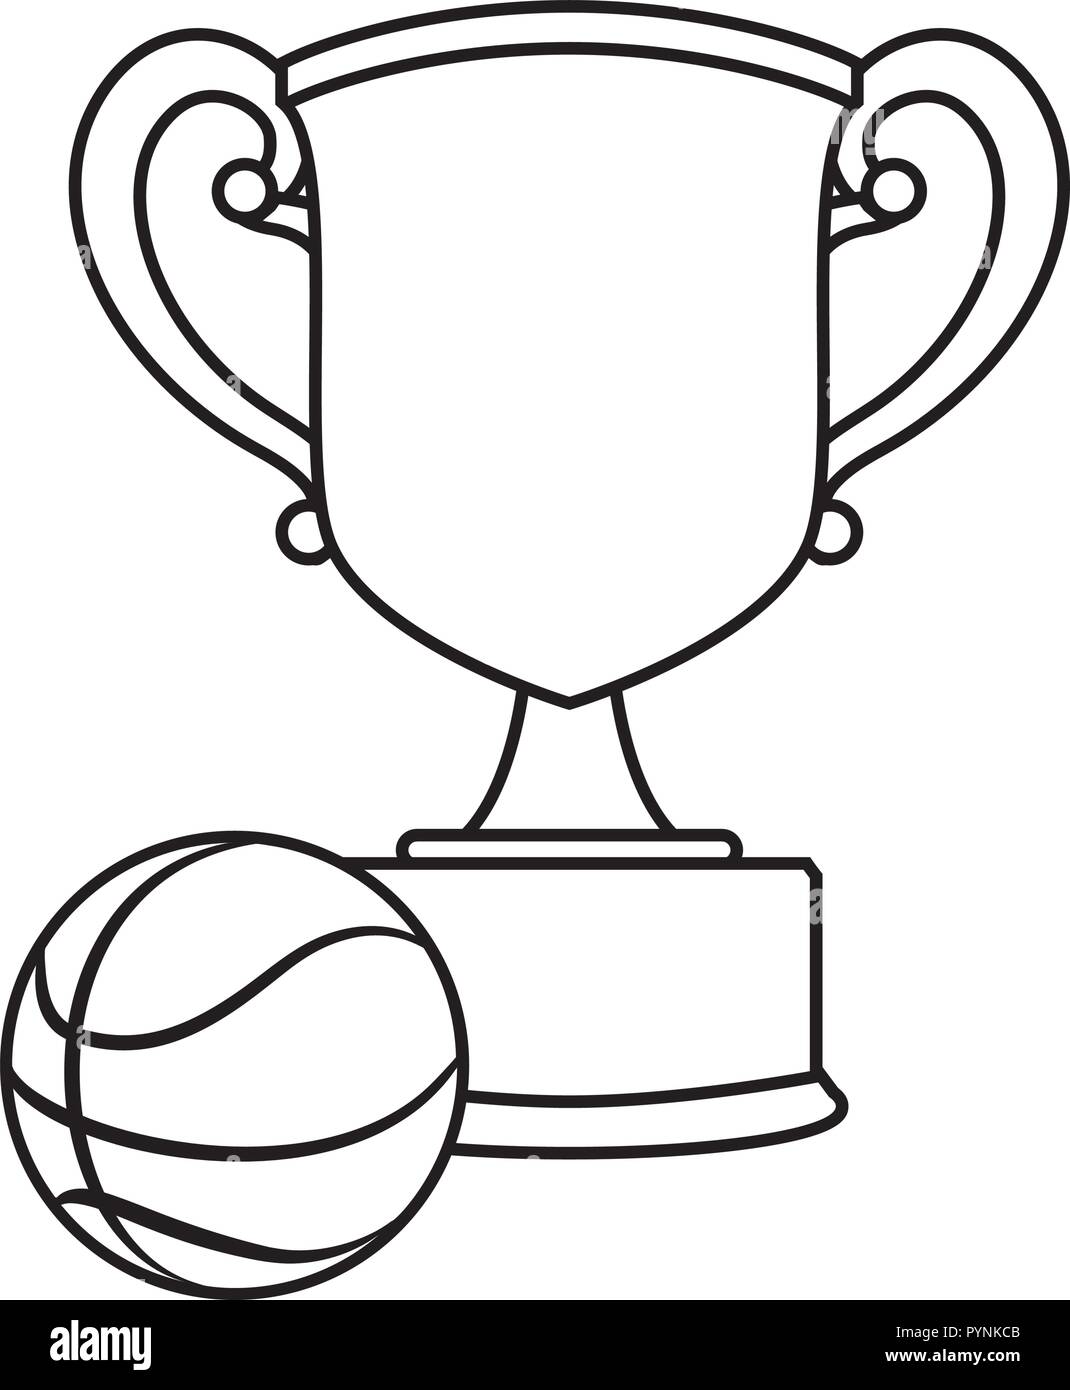 Trophy Ball Basketball Sport Award Vector Illustration Royalty Free SVG,  Cliparts, Vectors, and Stock Illustration. Image 123359166.